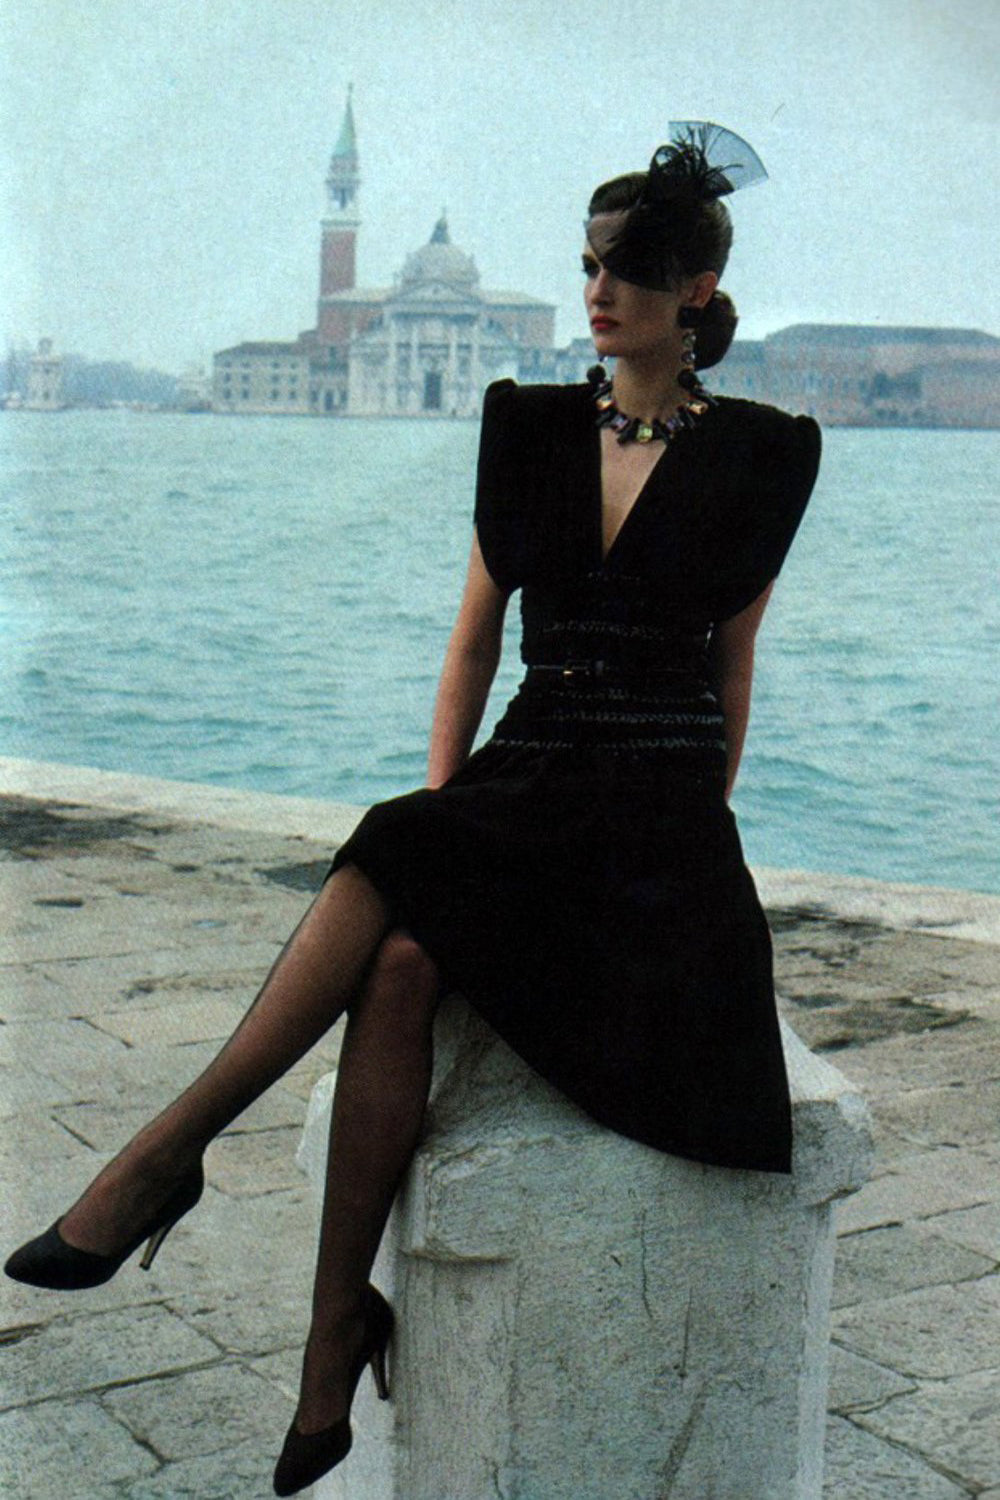 YSL Rive Gauche A/W 1983 Sequin Dress